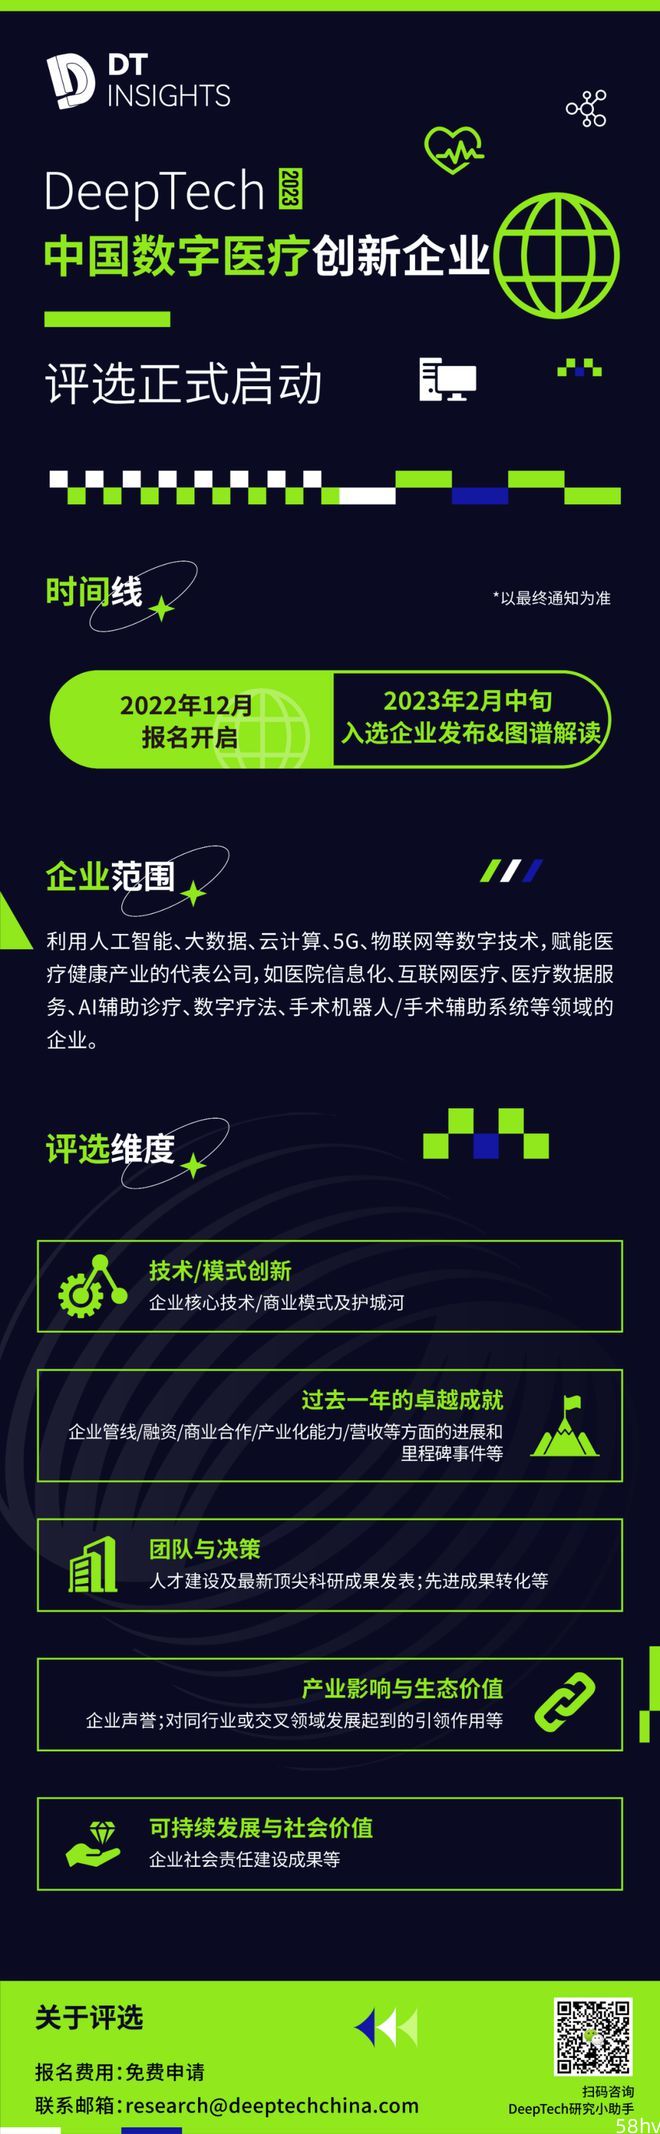 DeepTech正式开启“2023年中国数字医疗创新企业”评选征集！